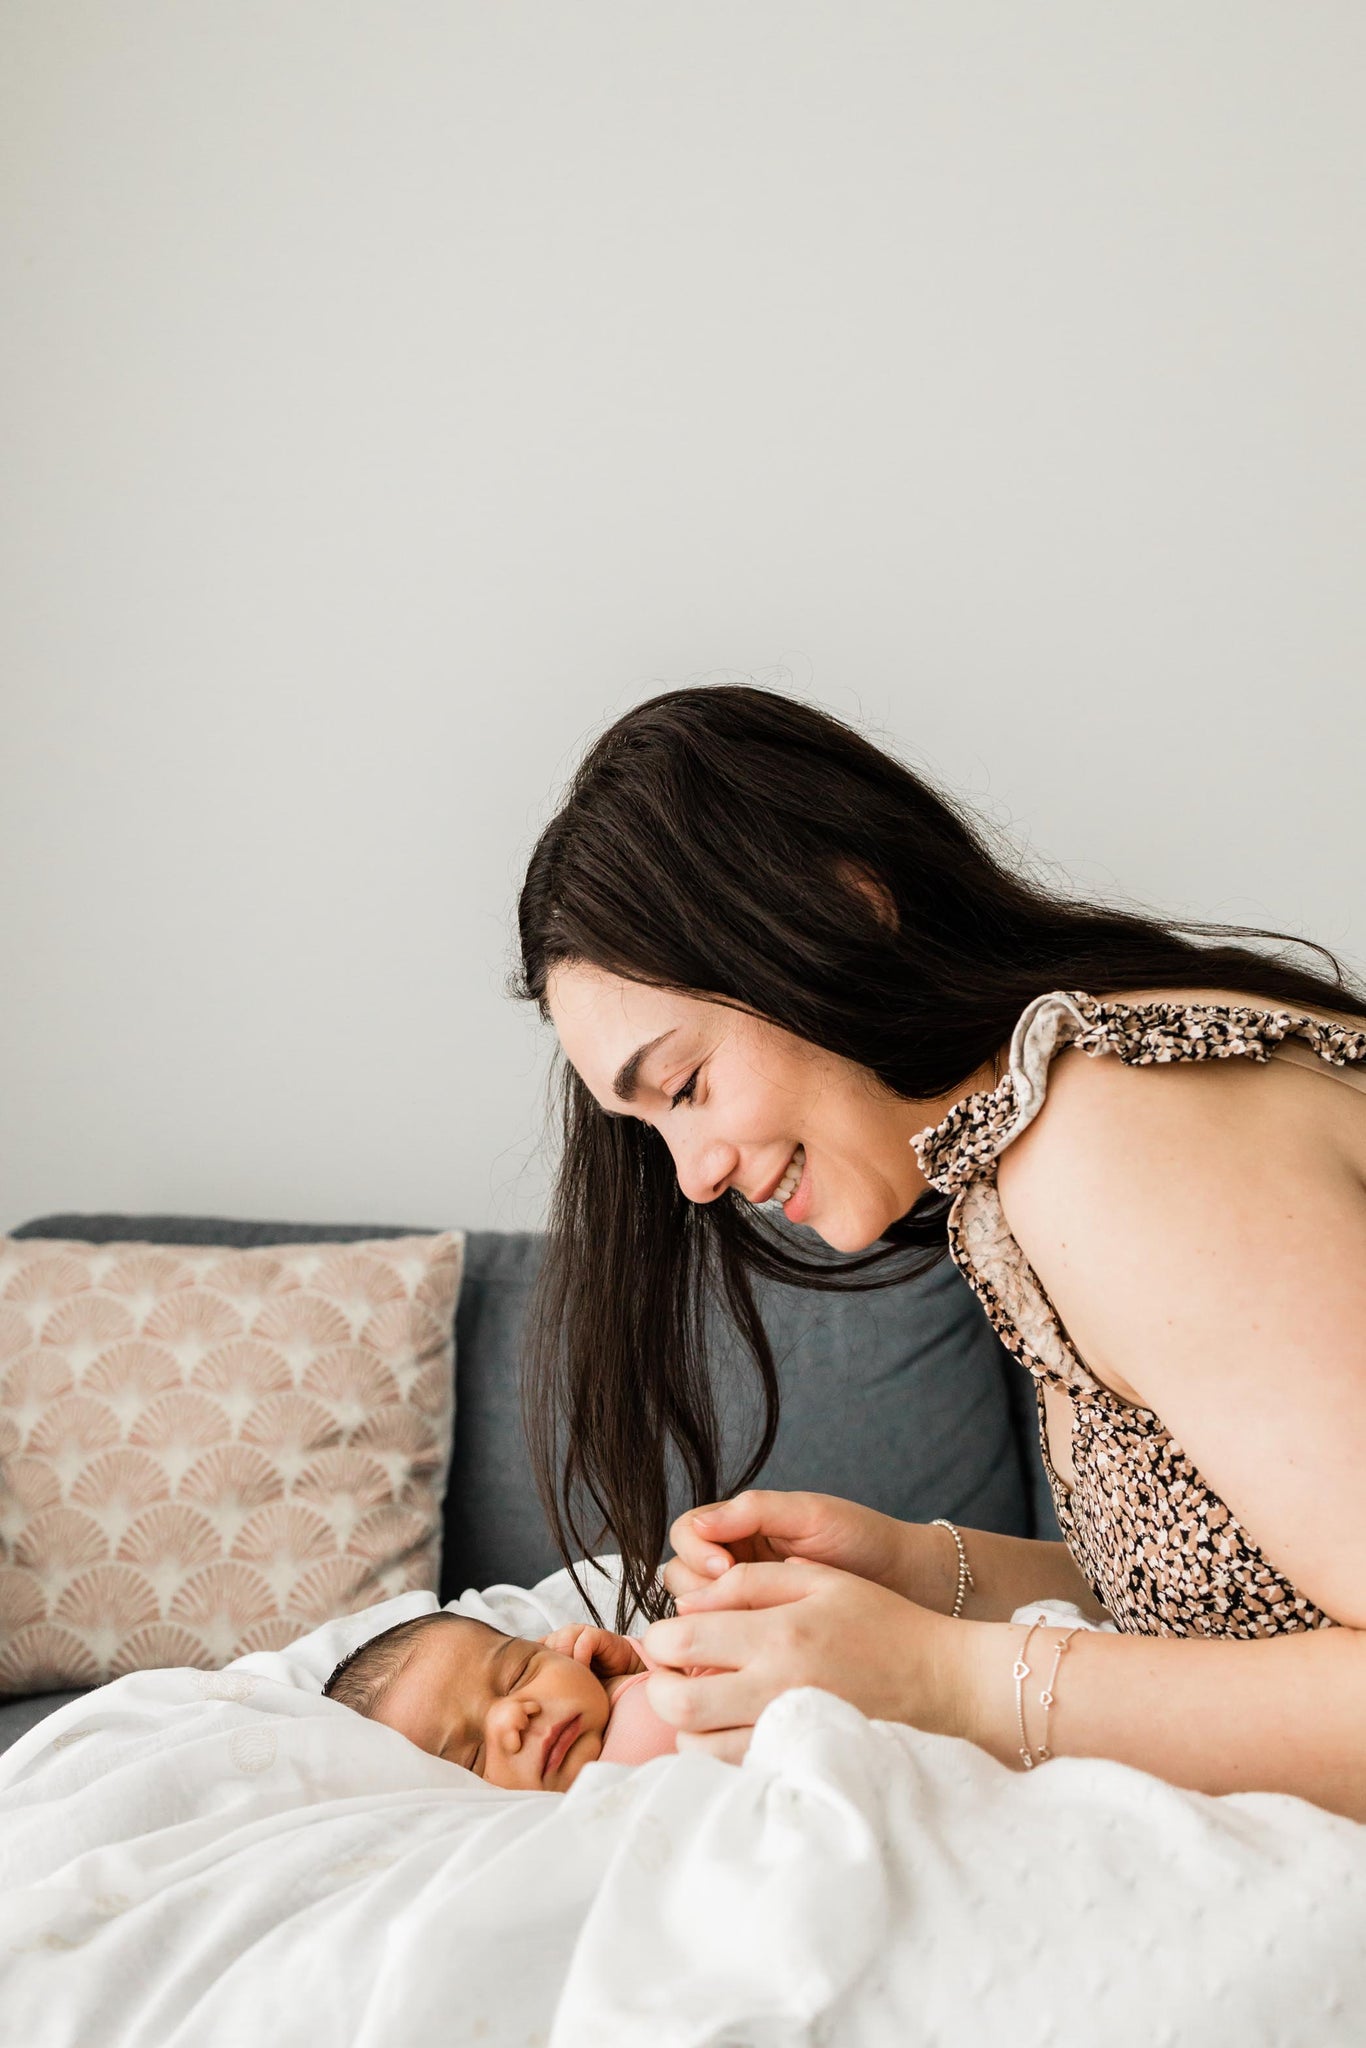 How to avoid Mastitis during breastfeeding